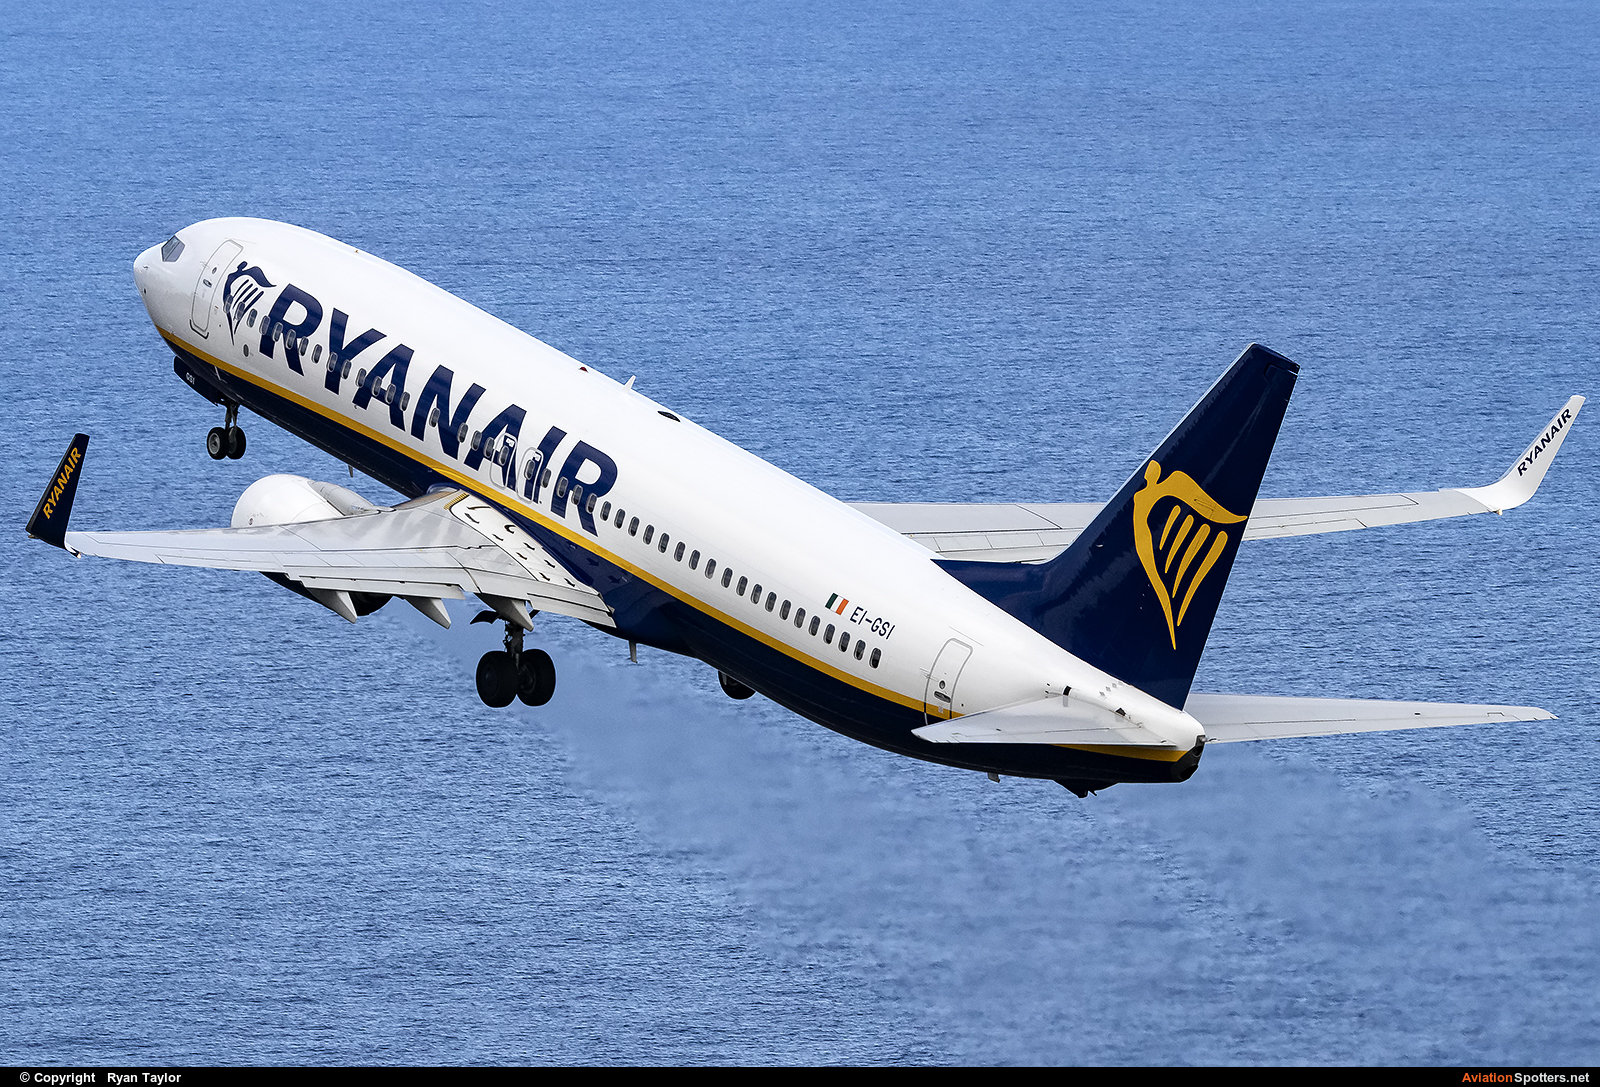 Ryanair  -  737-800  (EI-GSI) By Ryan Taylor (VanquishPhotog)